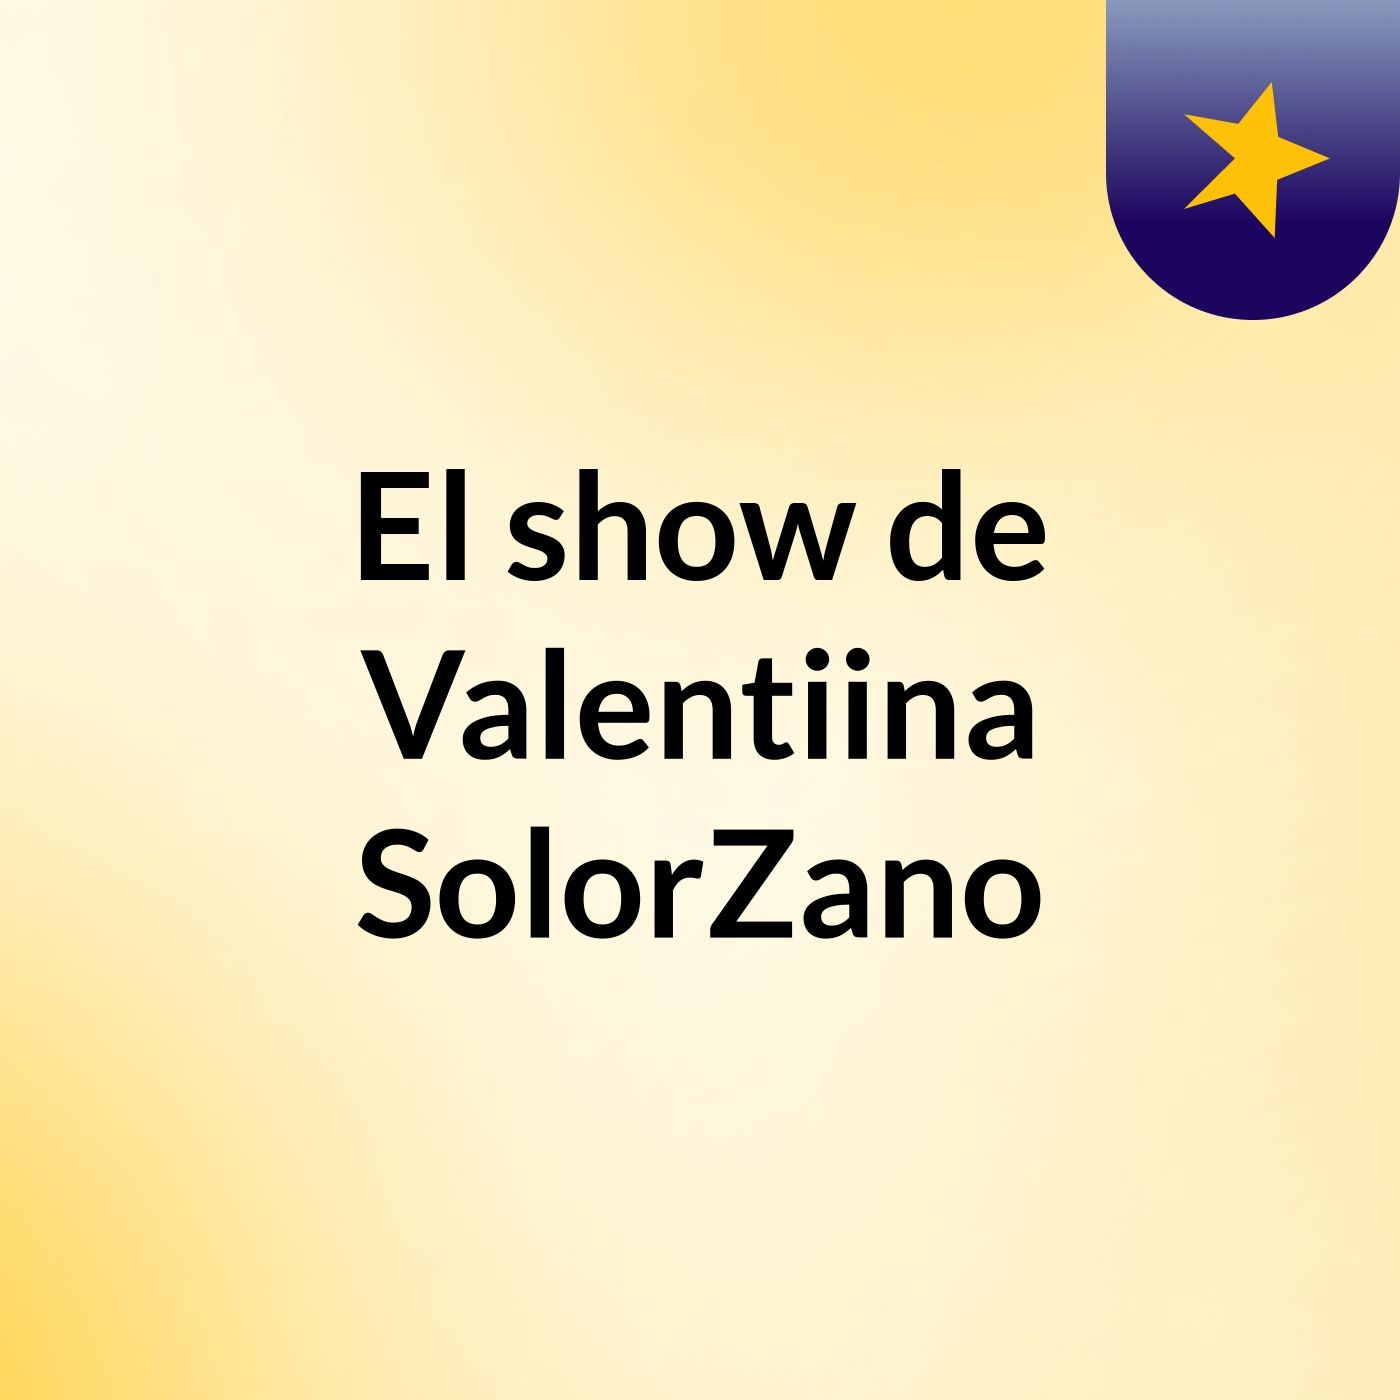 El show de Valentiina SolorZano